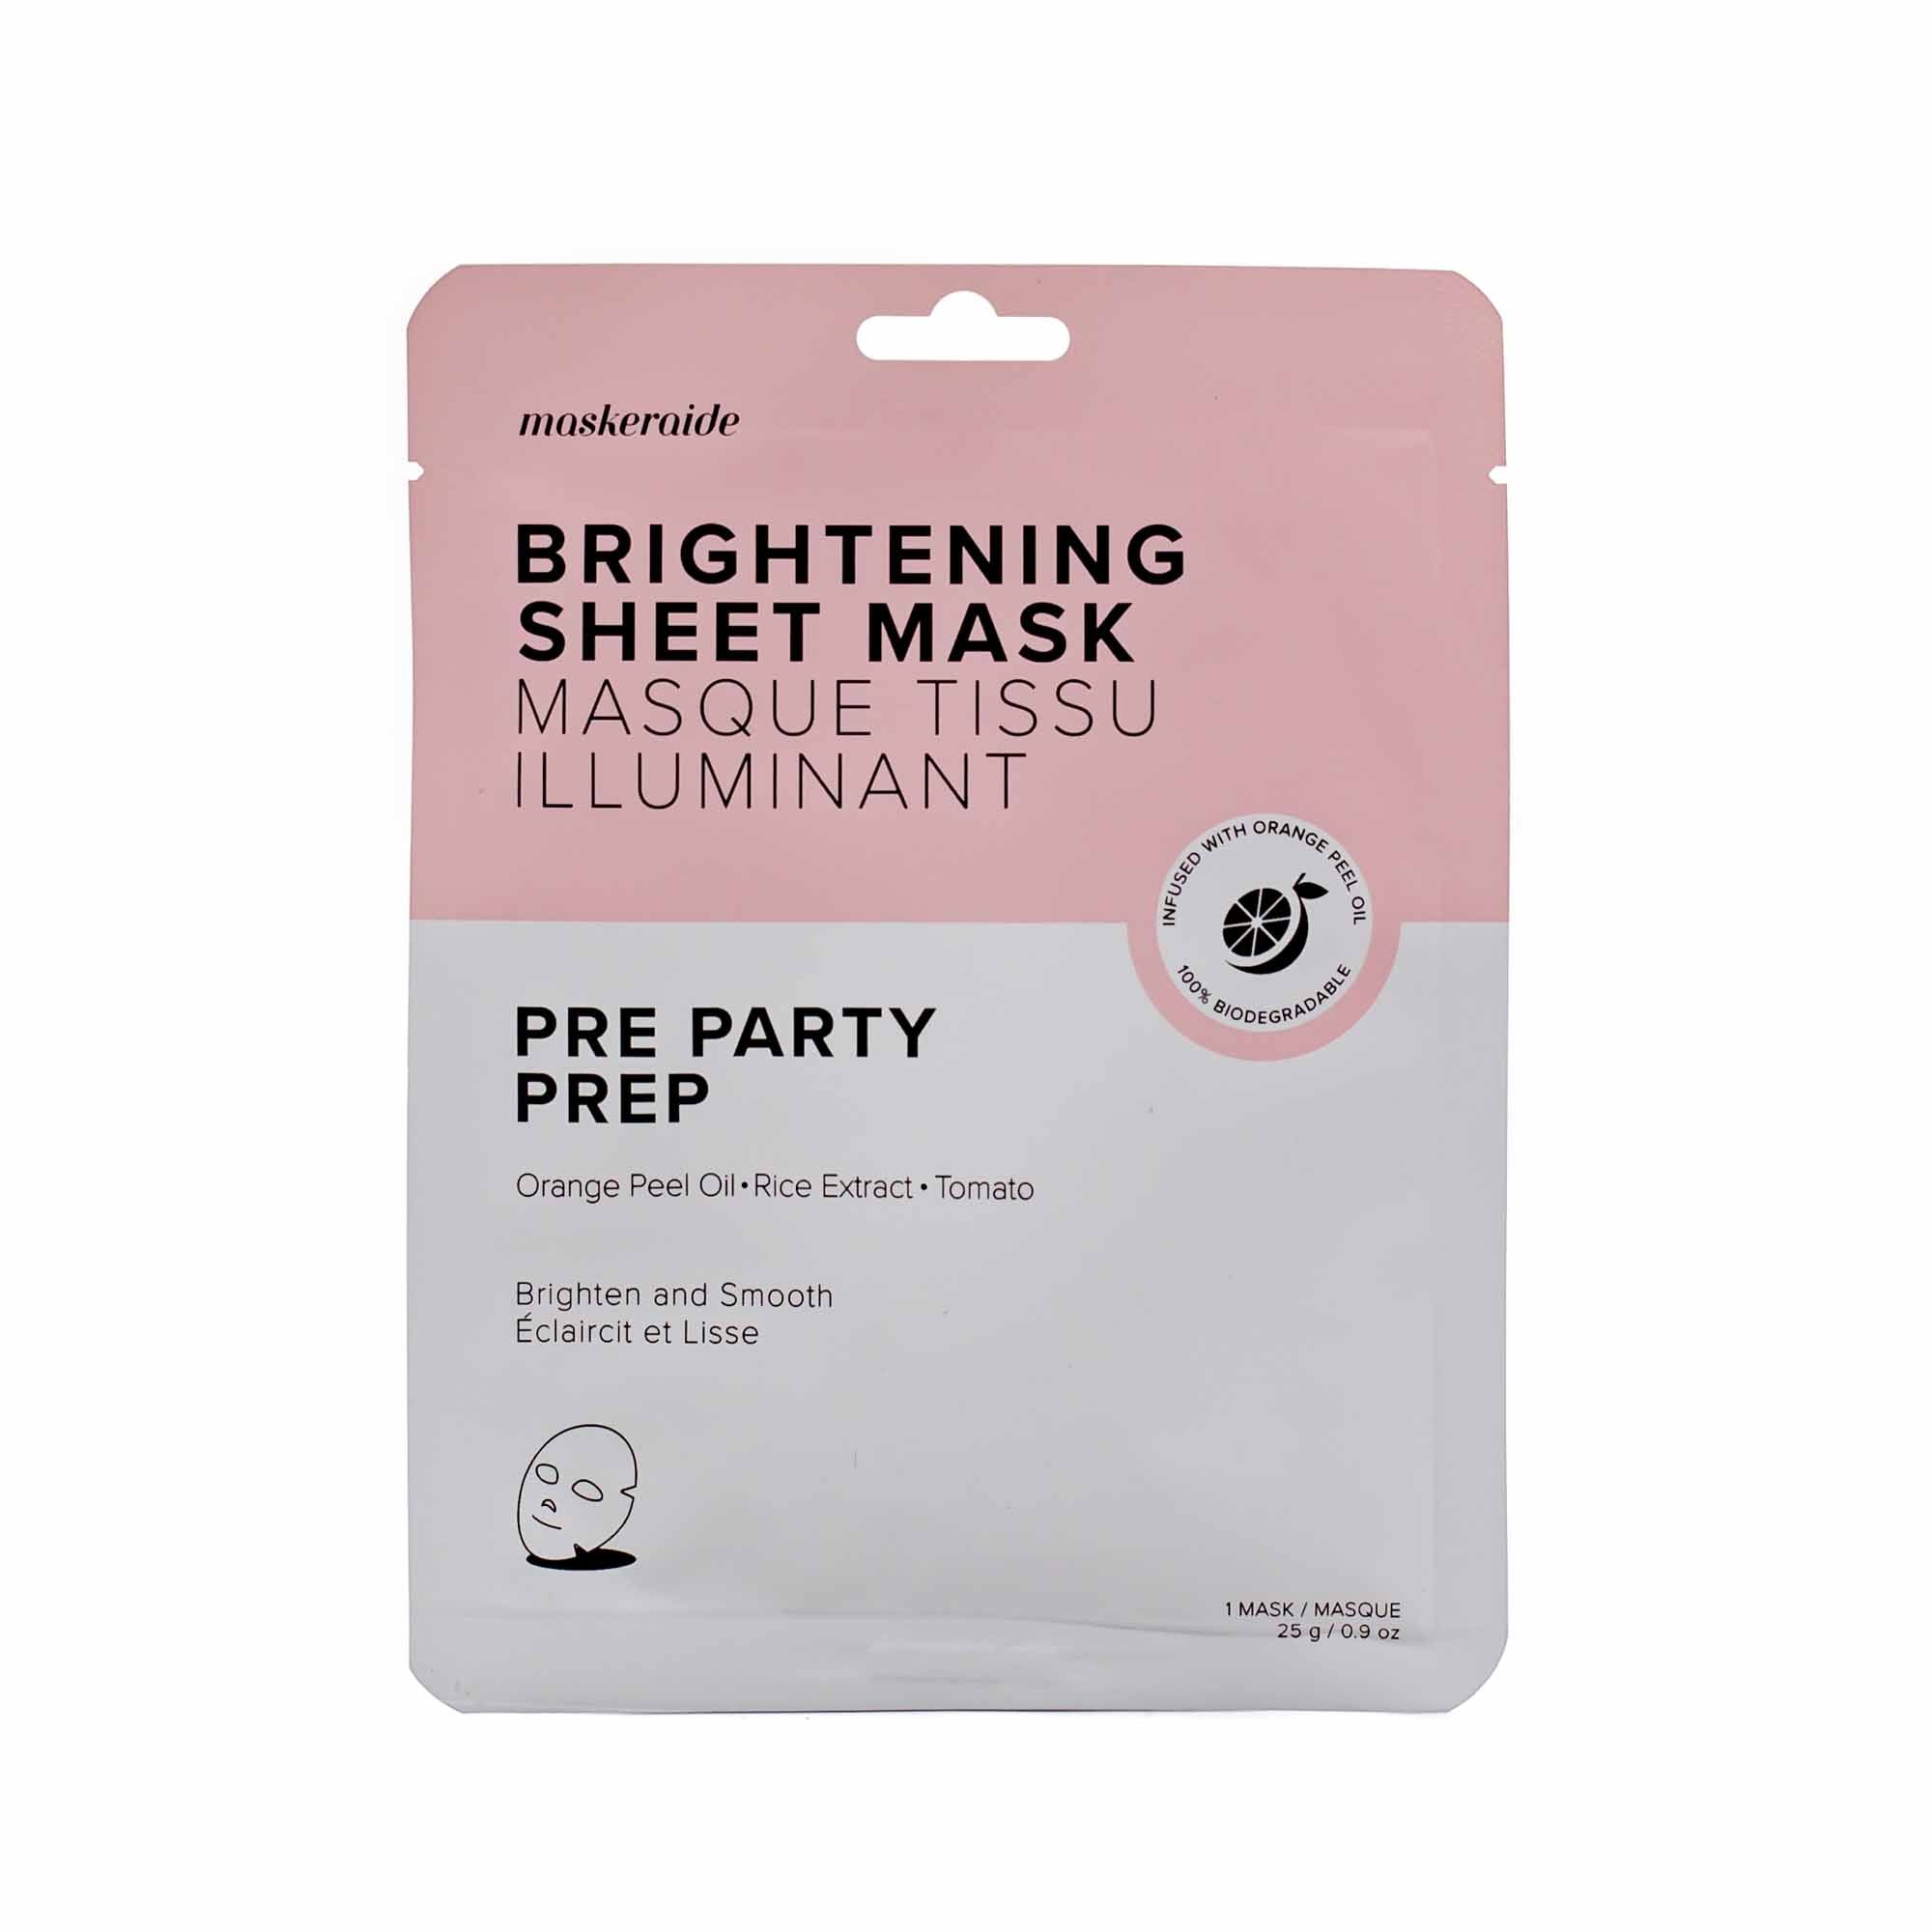 Pre Party Prep Sheet Mask - Mortise And Tenon